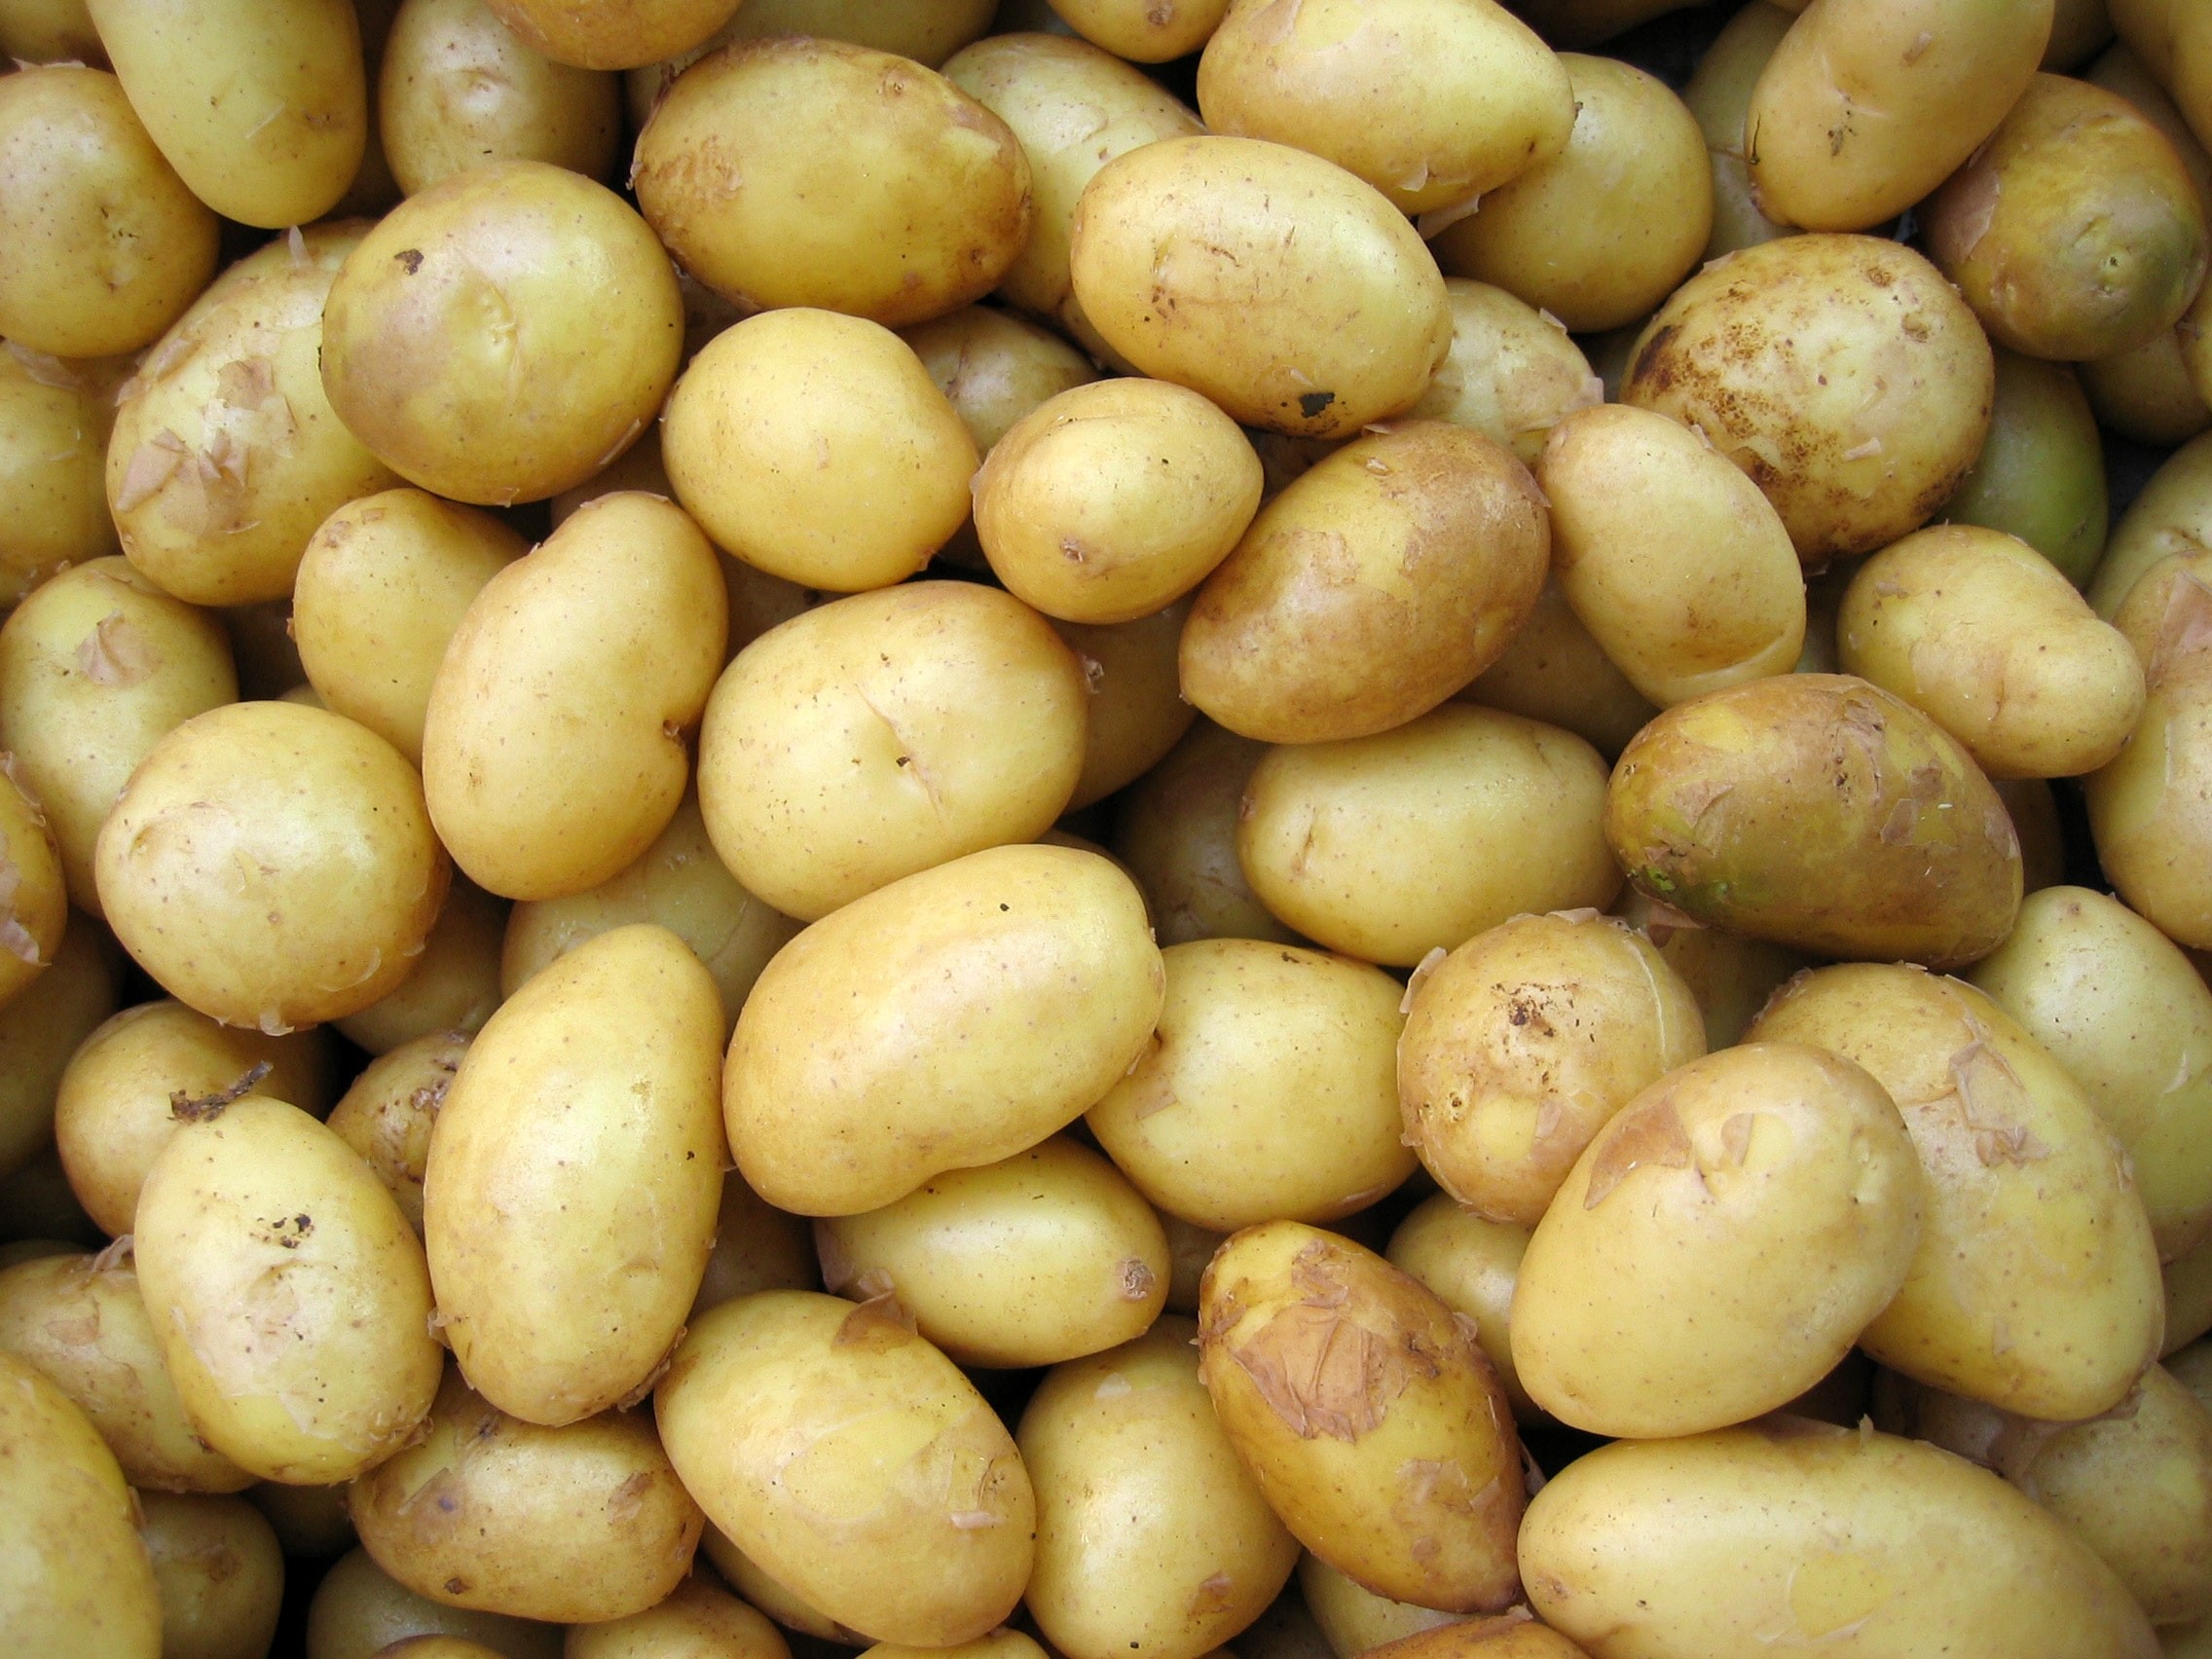 tons of potatoes